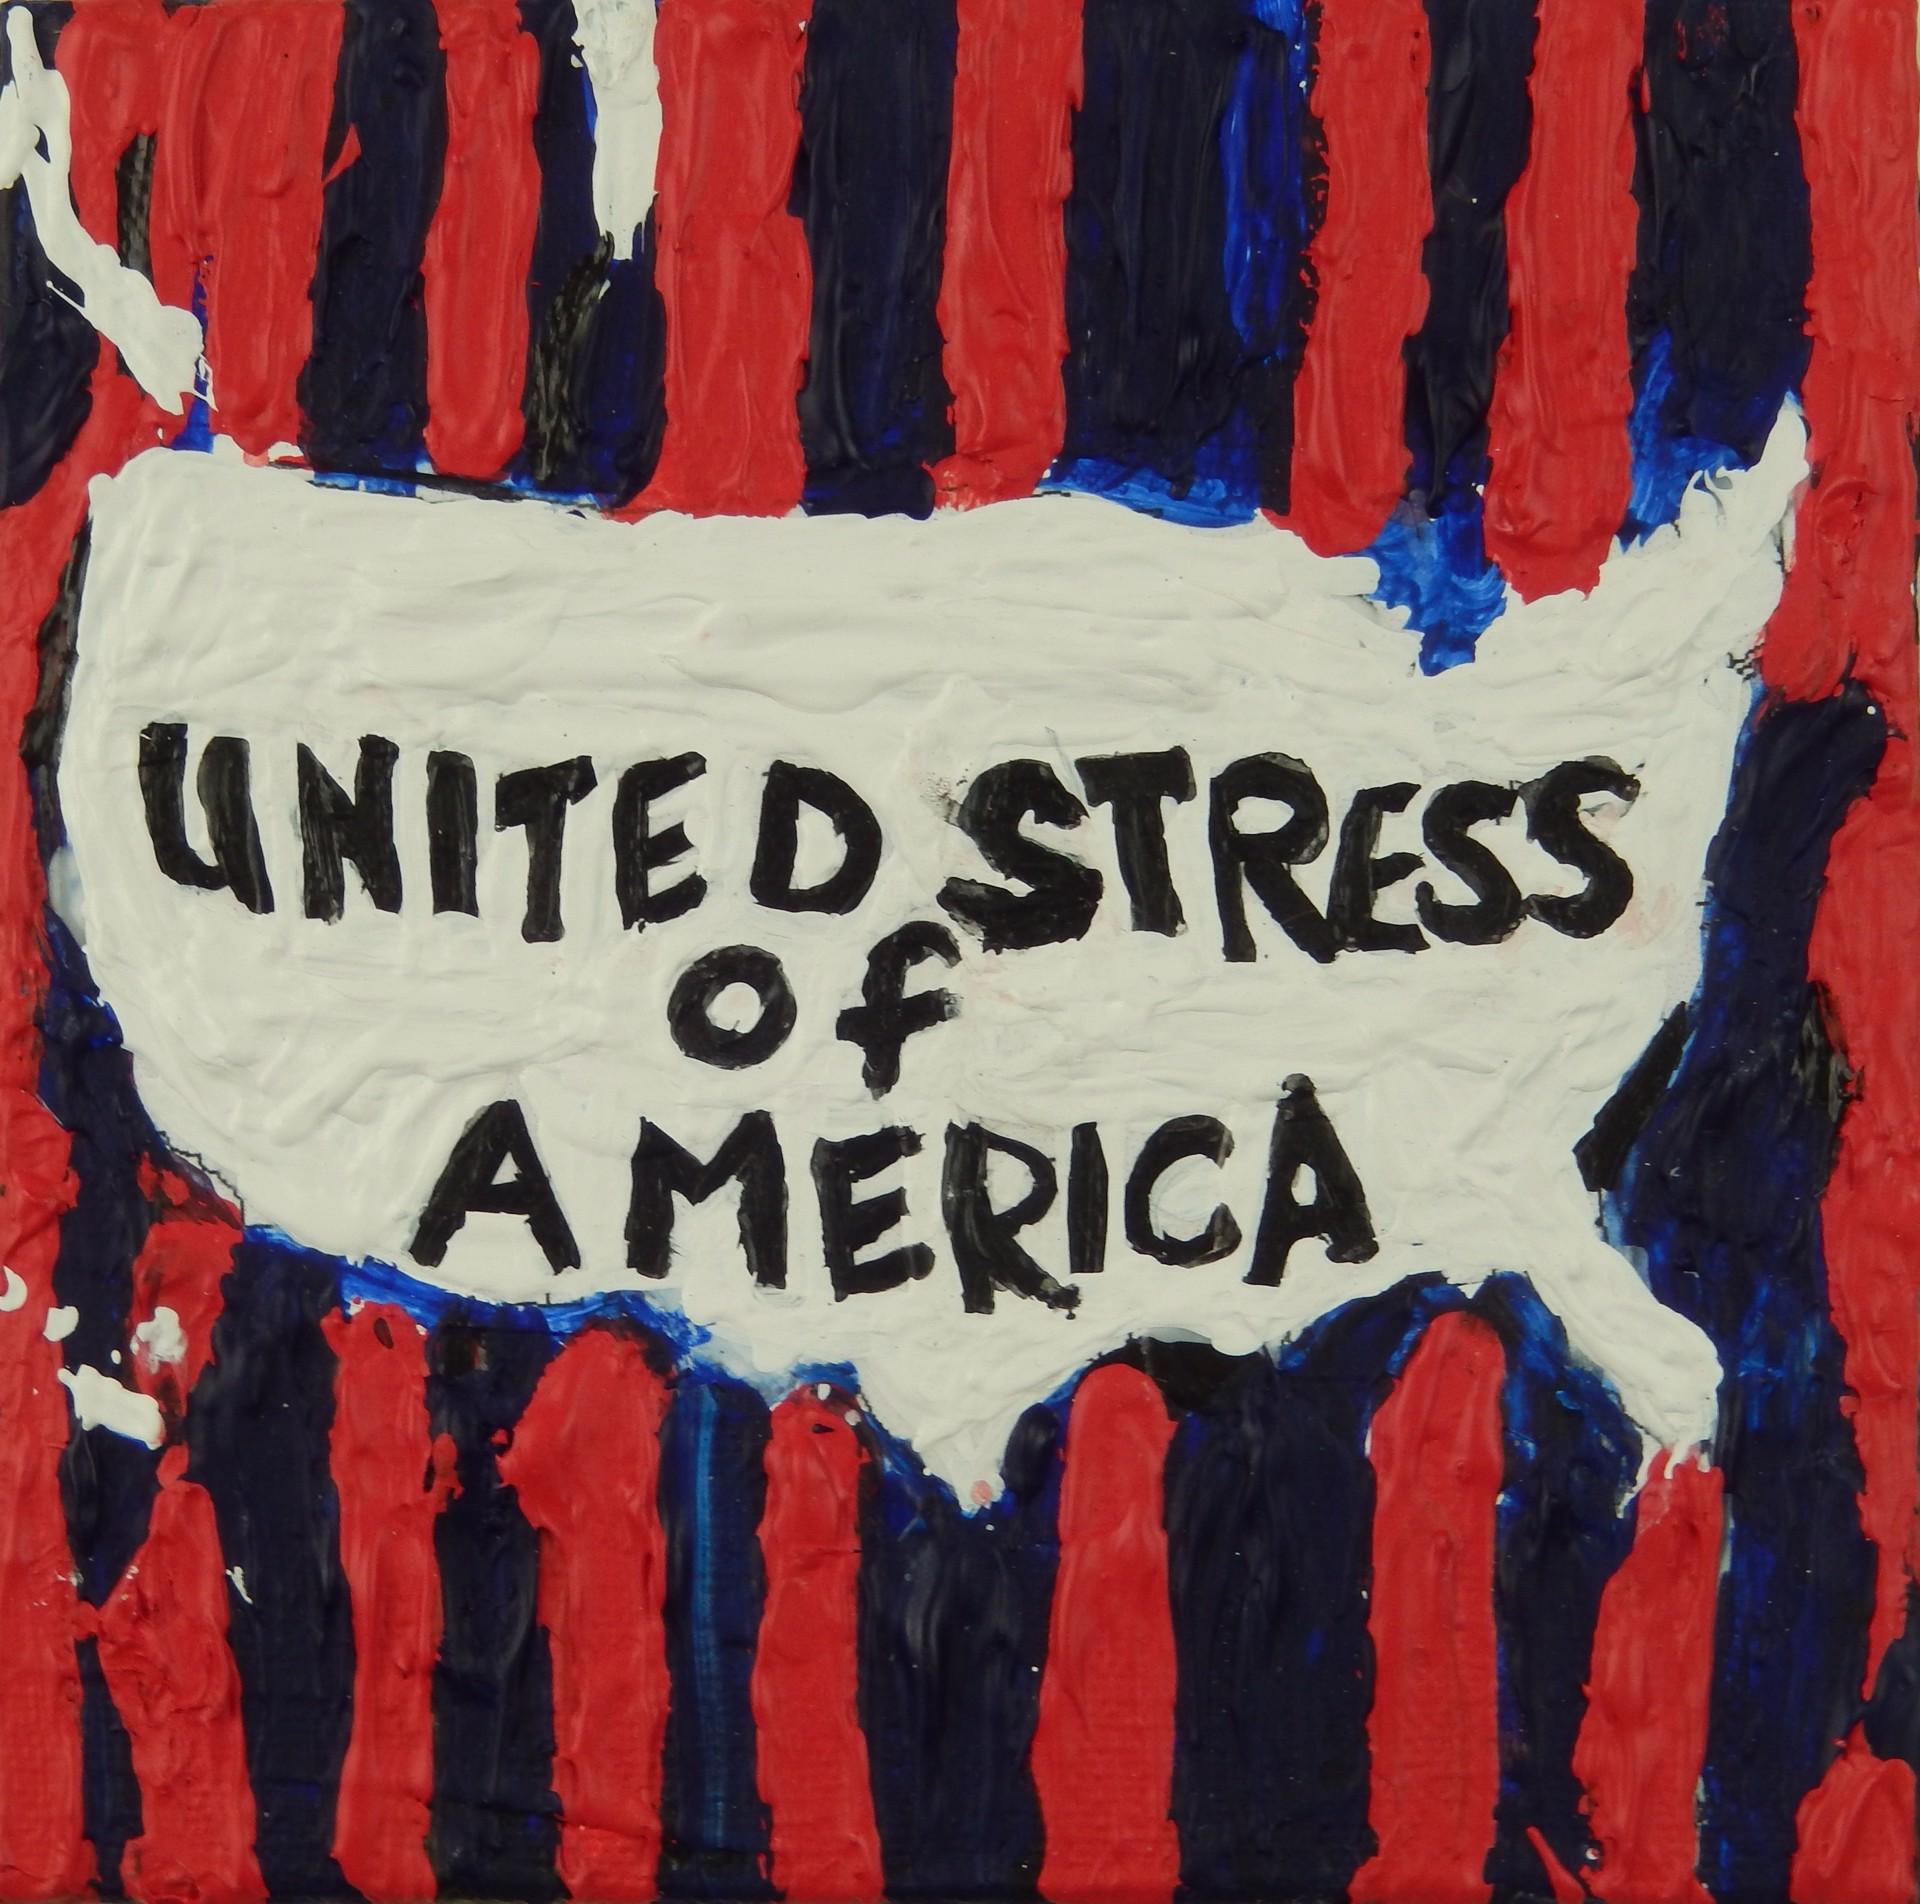 Linda Smith Figurative Painting - United Stress of America 3, 2017